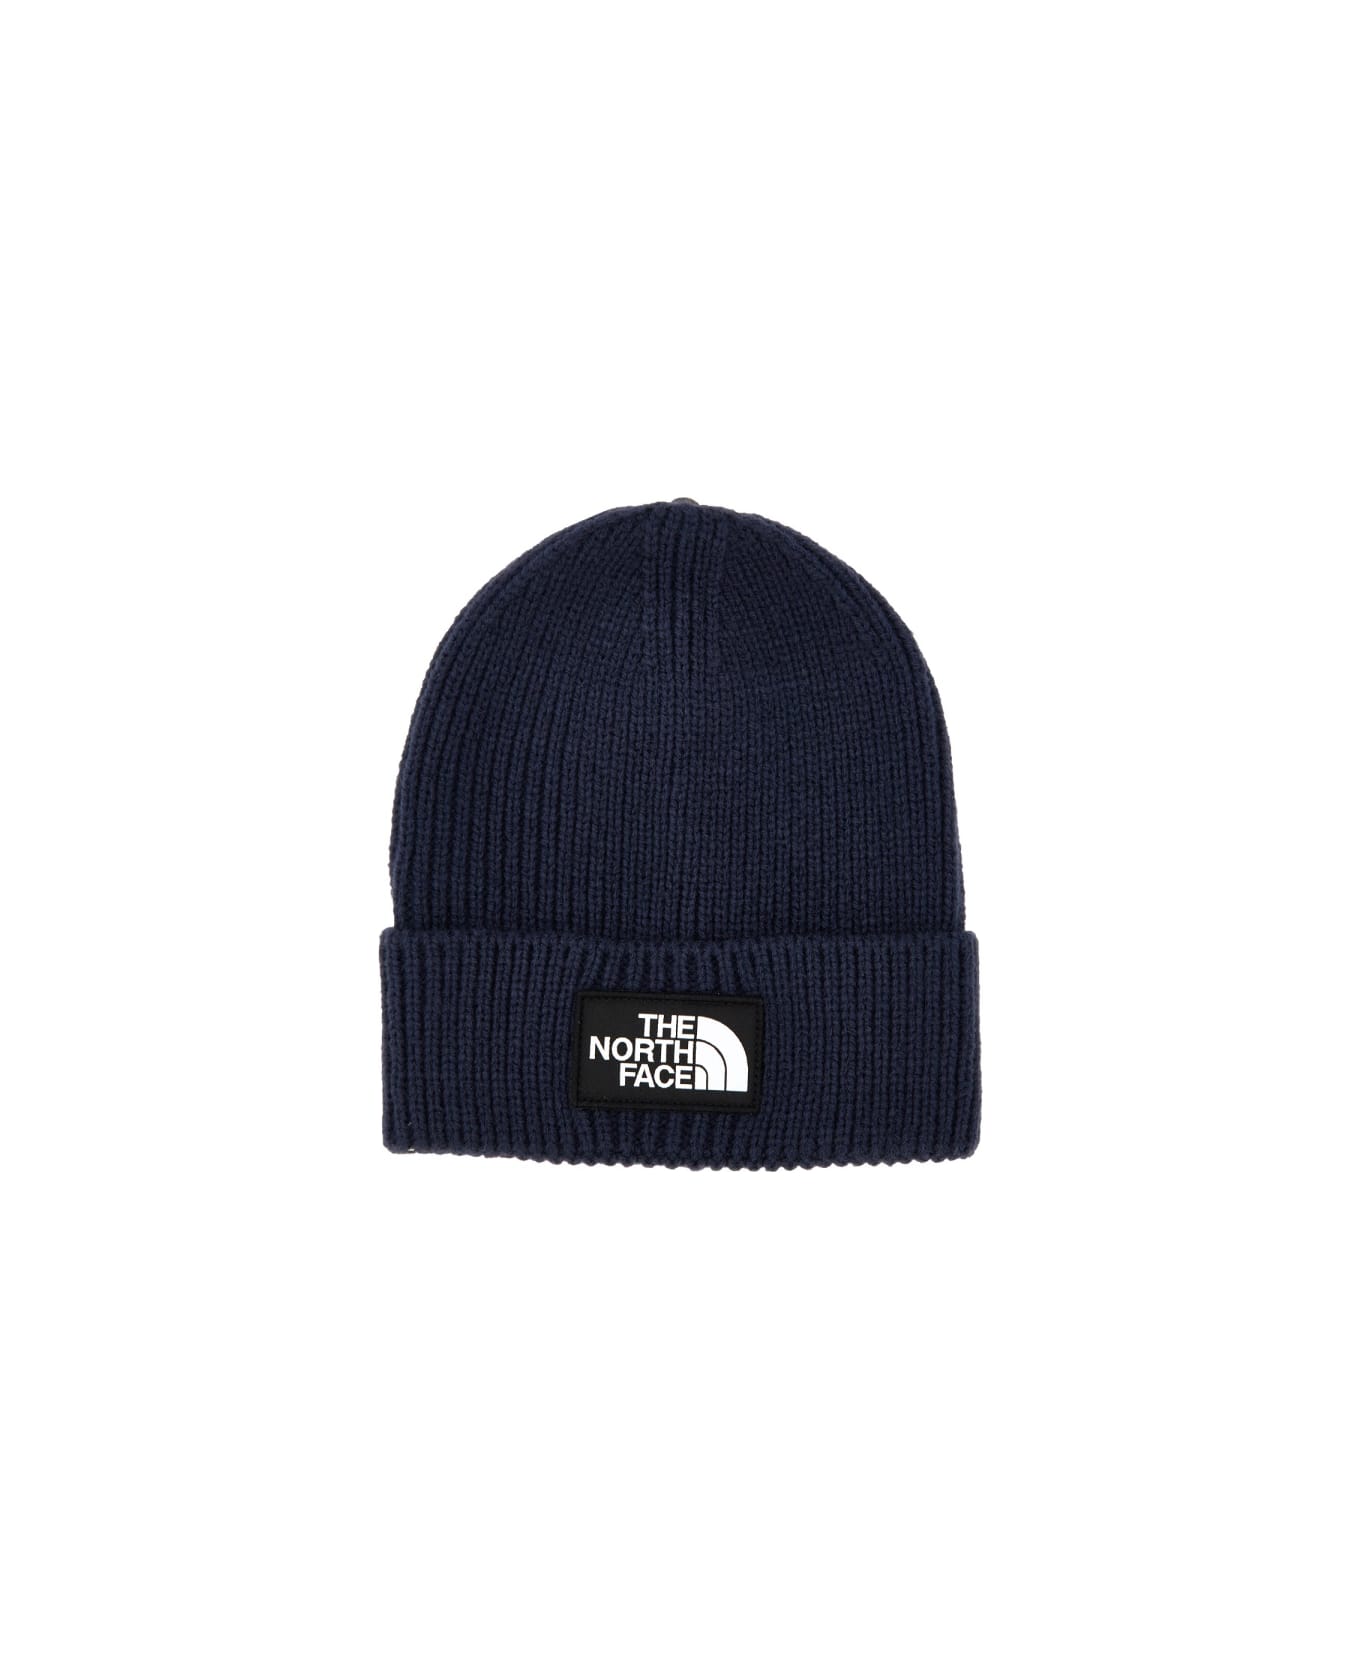 The North Face Beanie Hat - BLUE 帽子